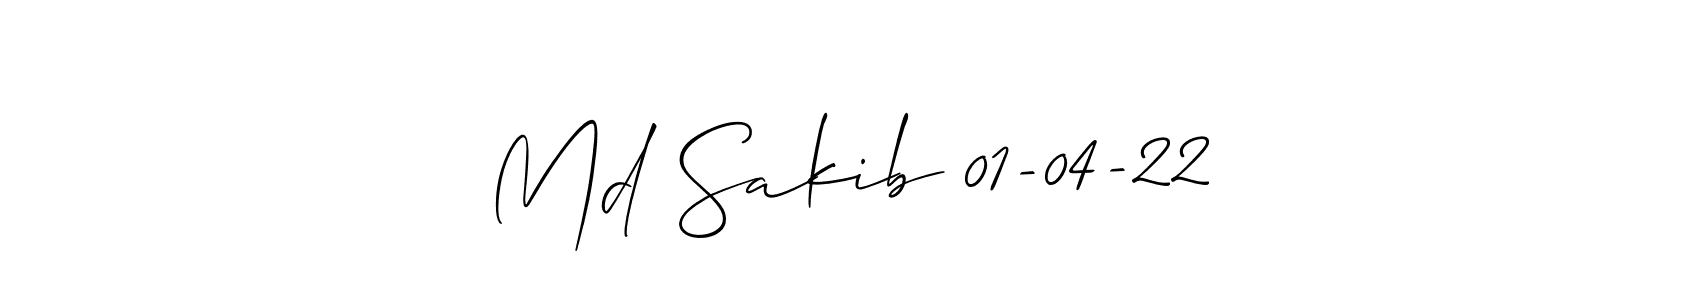 Md Sakib 01-04-22 stylish signature style. Best Handwritten Sign (Allison_Script) for my name. Handwritten Signature Collection Ideas for my name Md Sakib 01-04-22. Md Sakib 01-04-22 signature style 2 images and pictures png